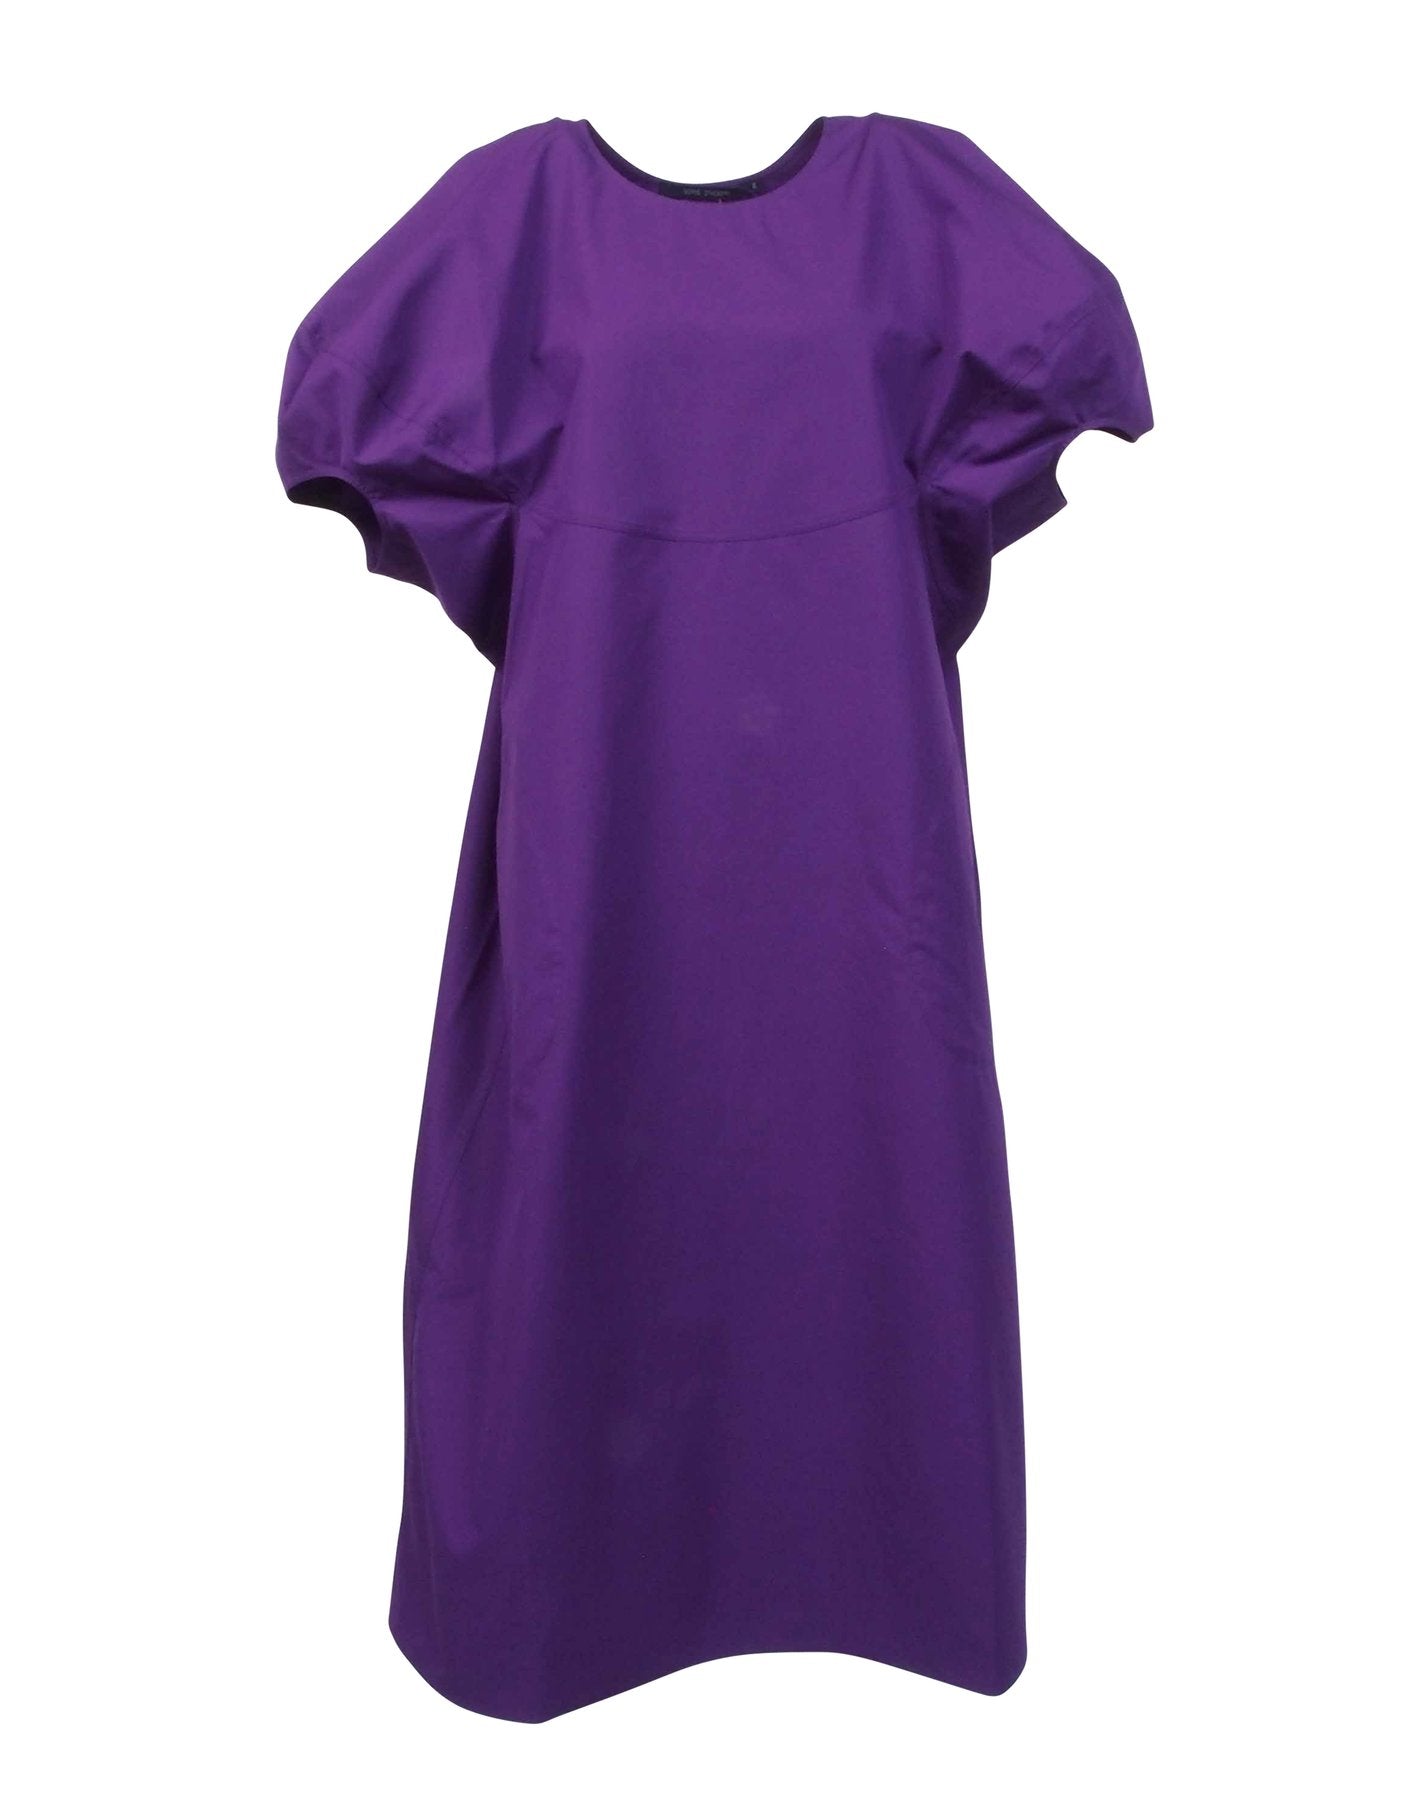 Sofie D'Hoore Dot Dress in Violet